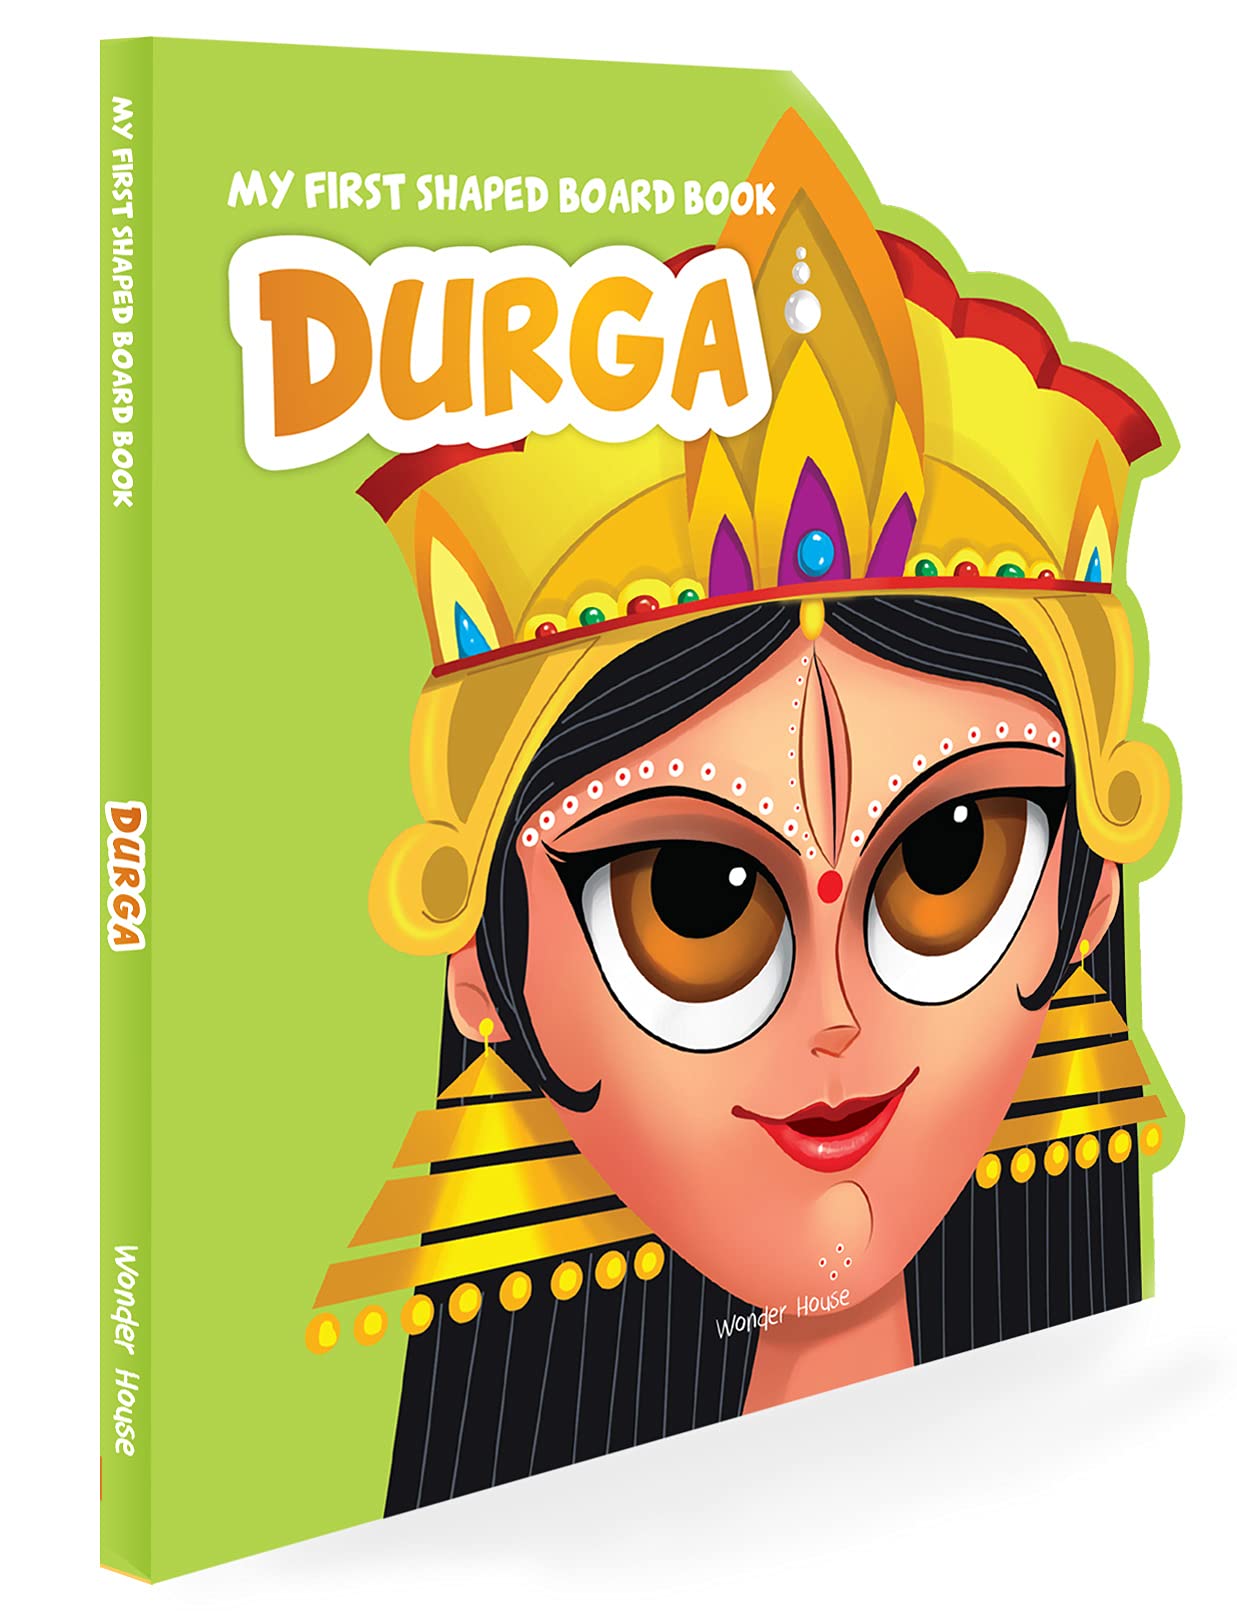 My First Shaped Board Book: Durga